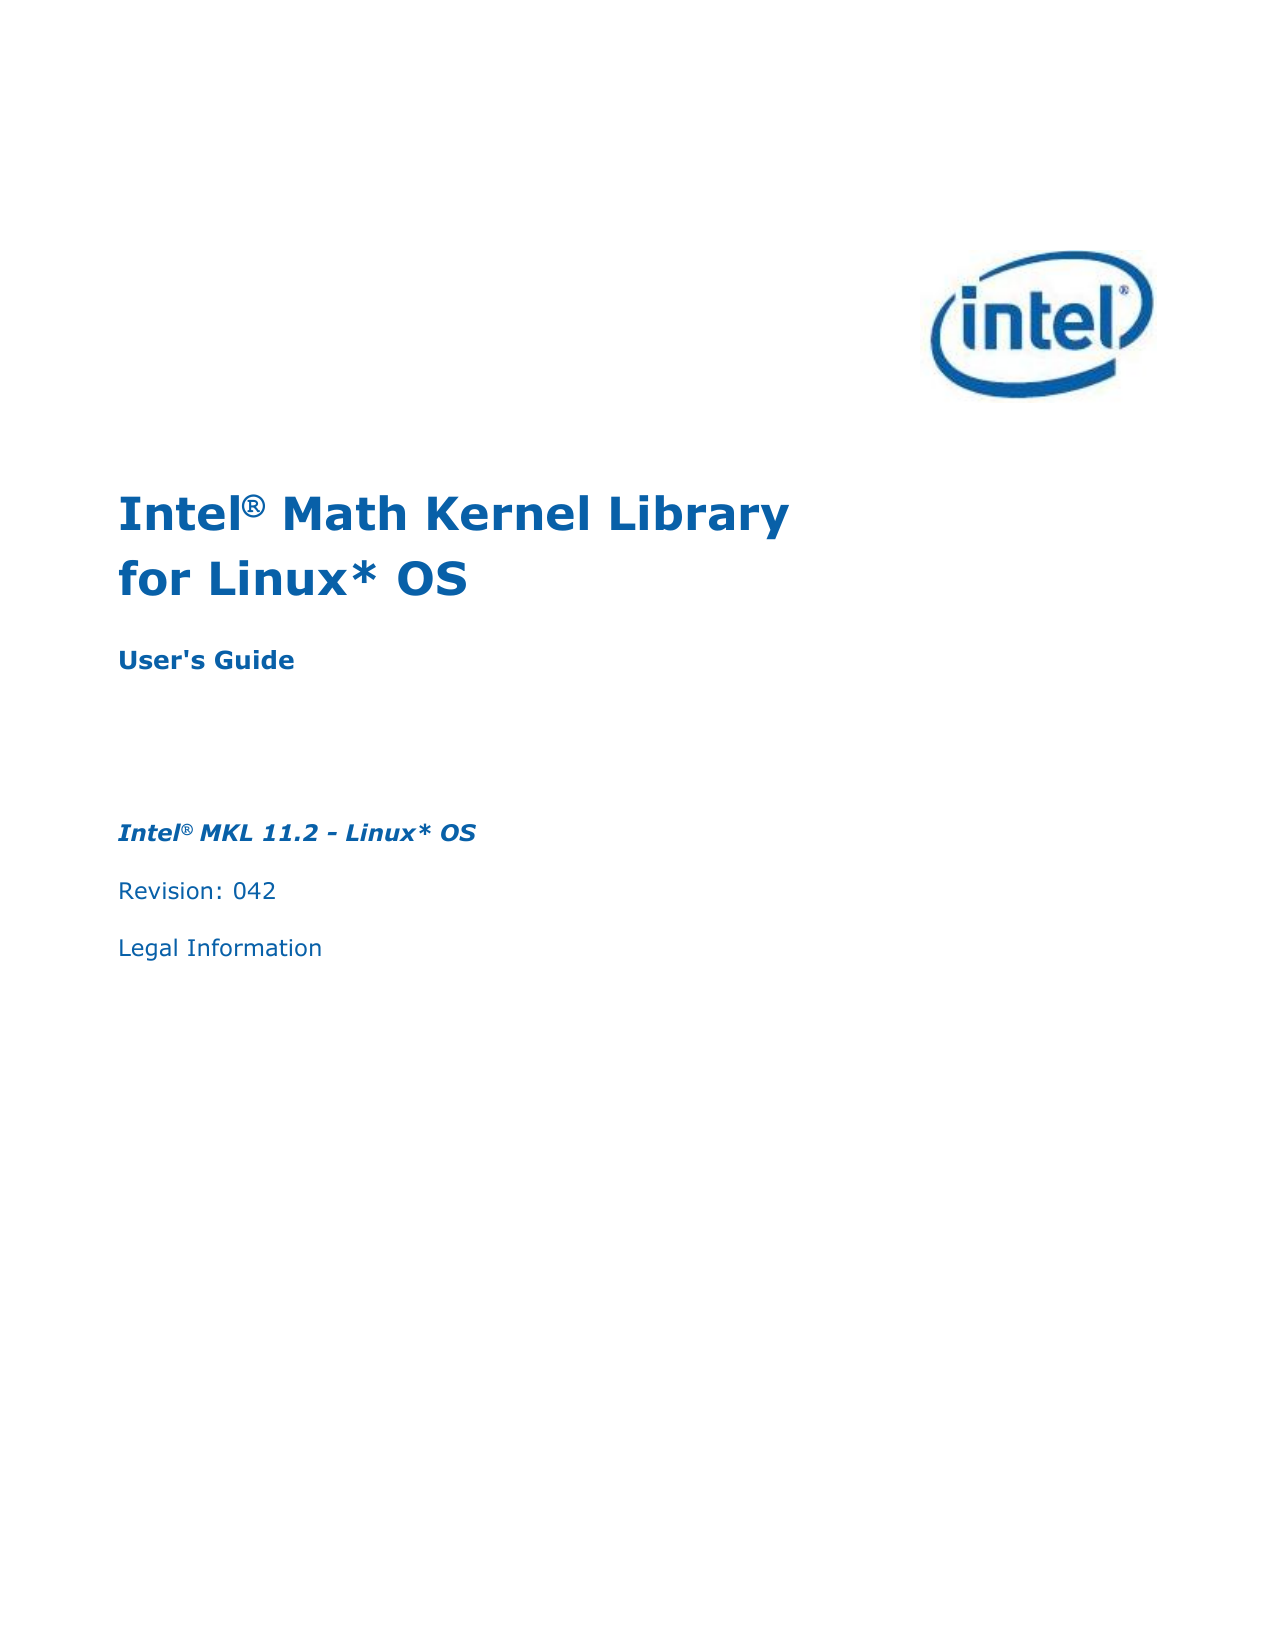 linpack benchmark math libraries